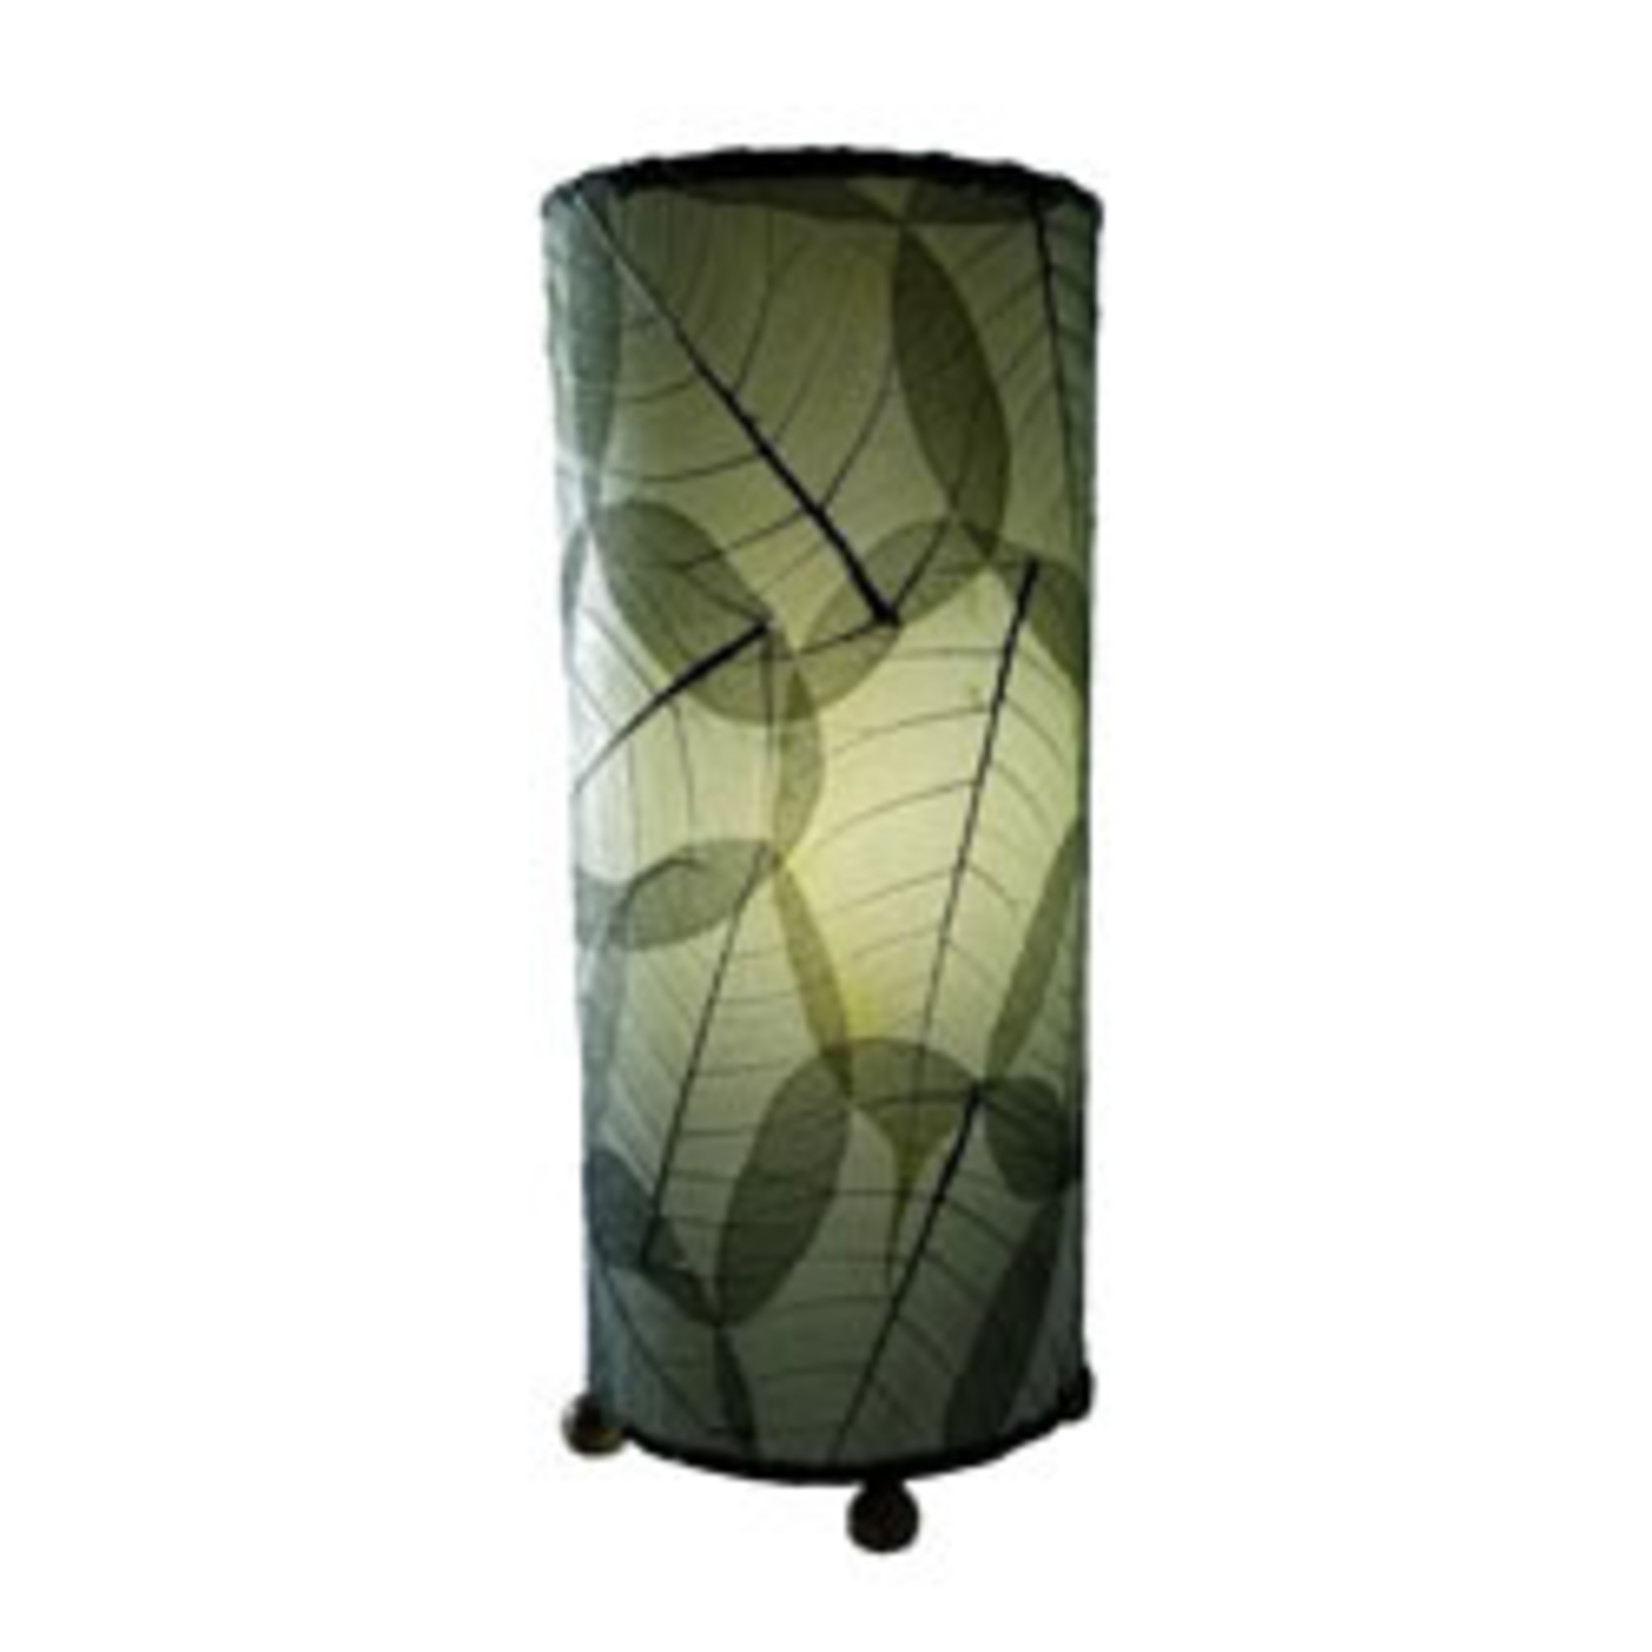 Eangee Home Design Lamp, EANGEE, BANYAN Cylinder, 17x7", green